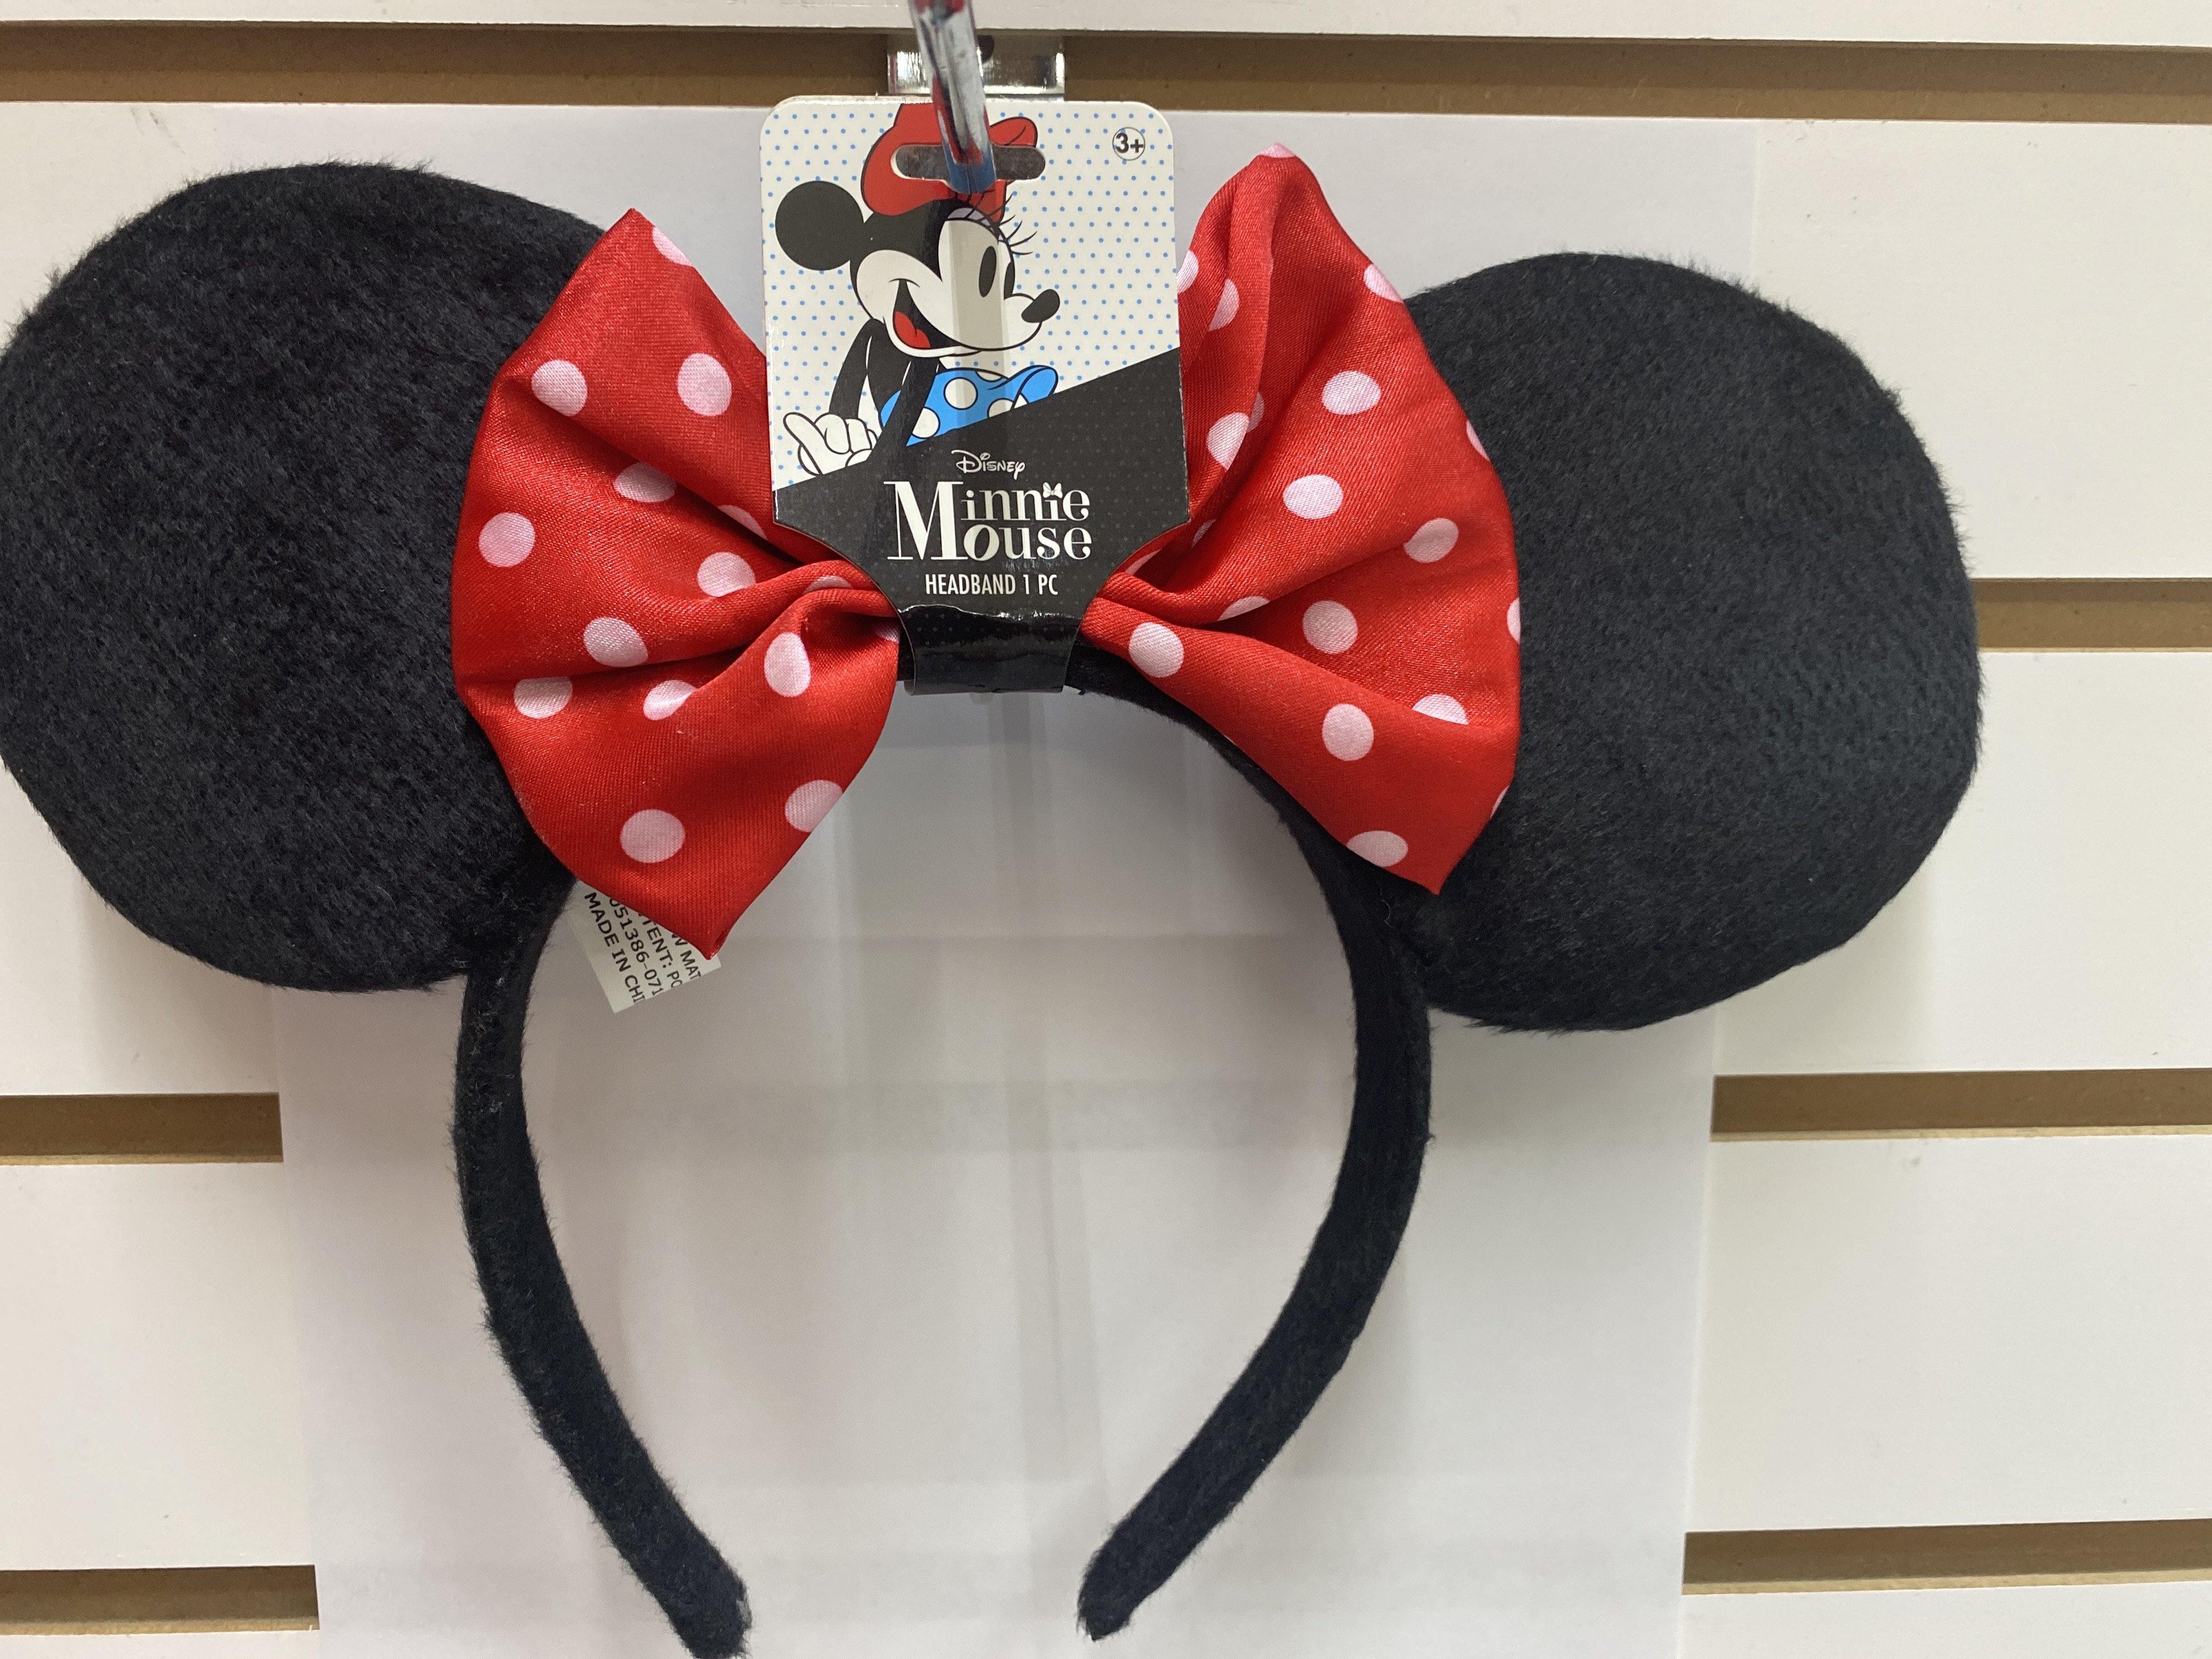 Disney's Minnie Mouse Classic Headband